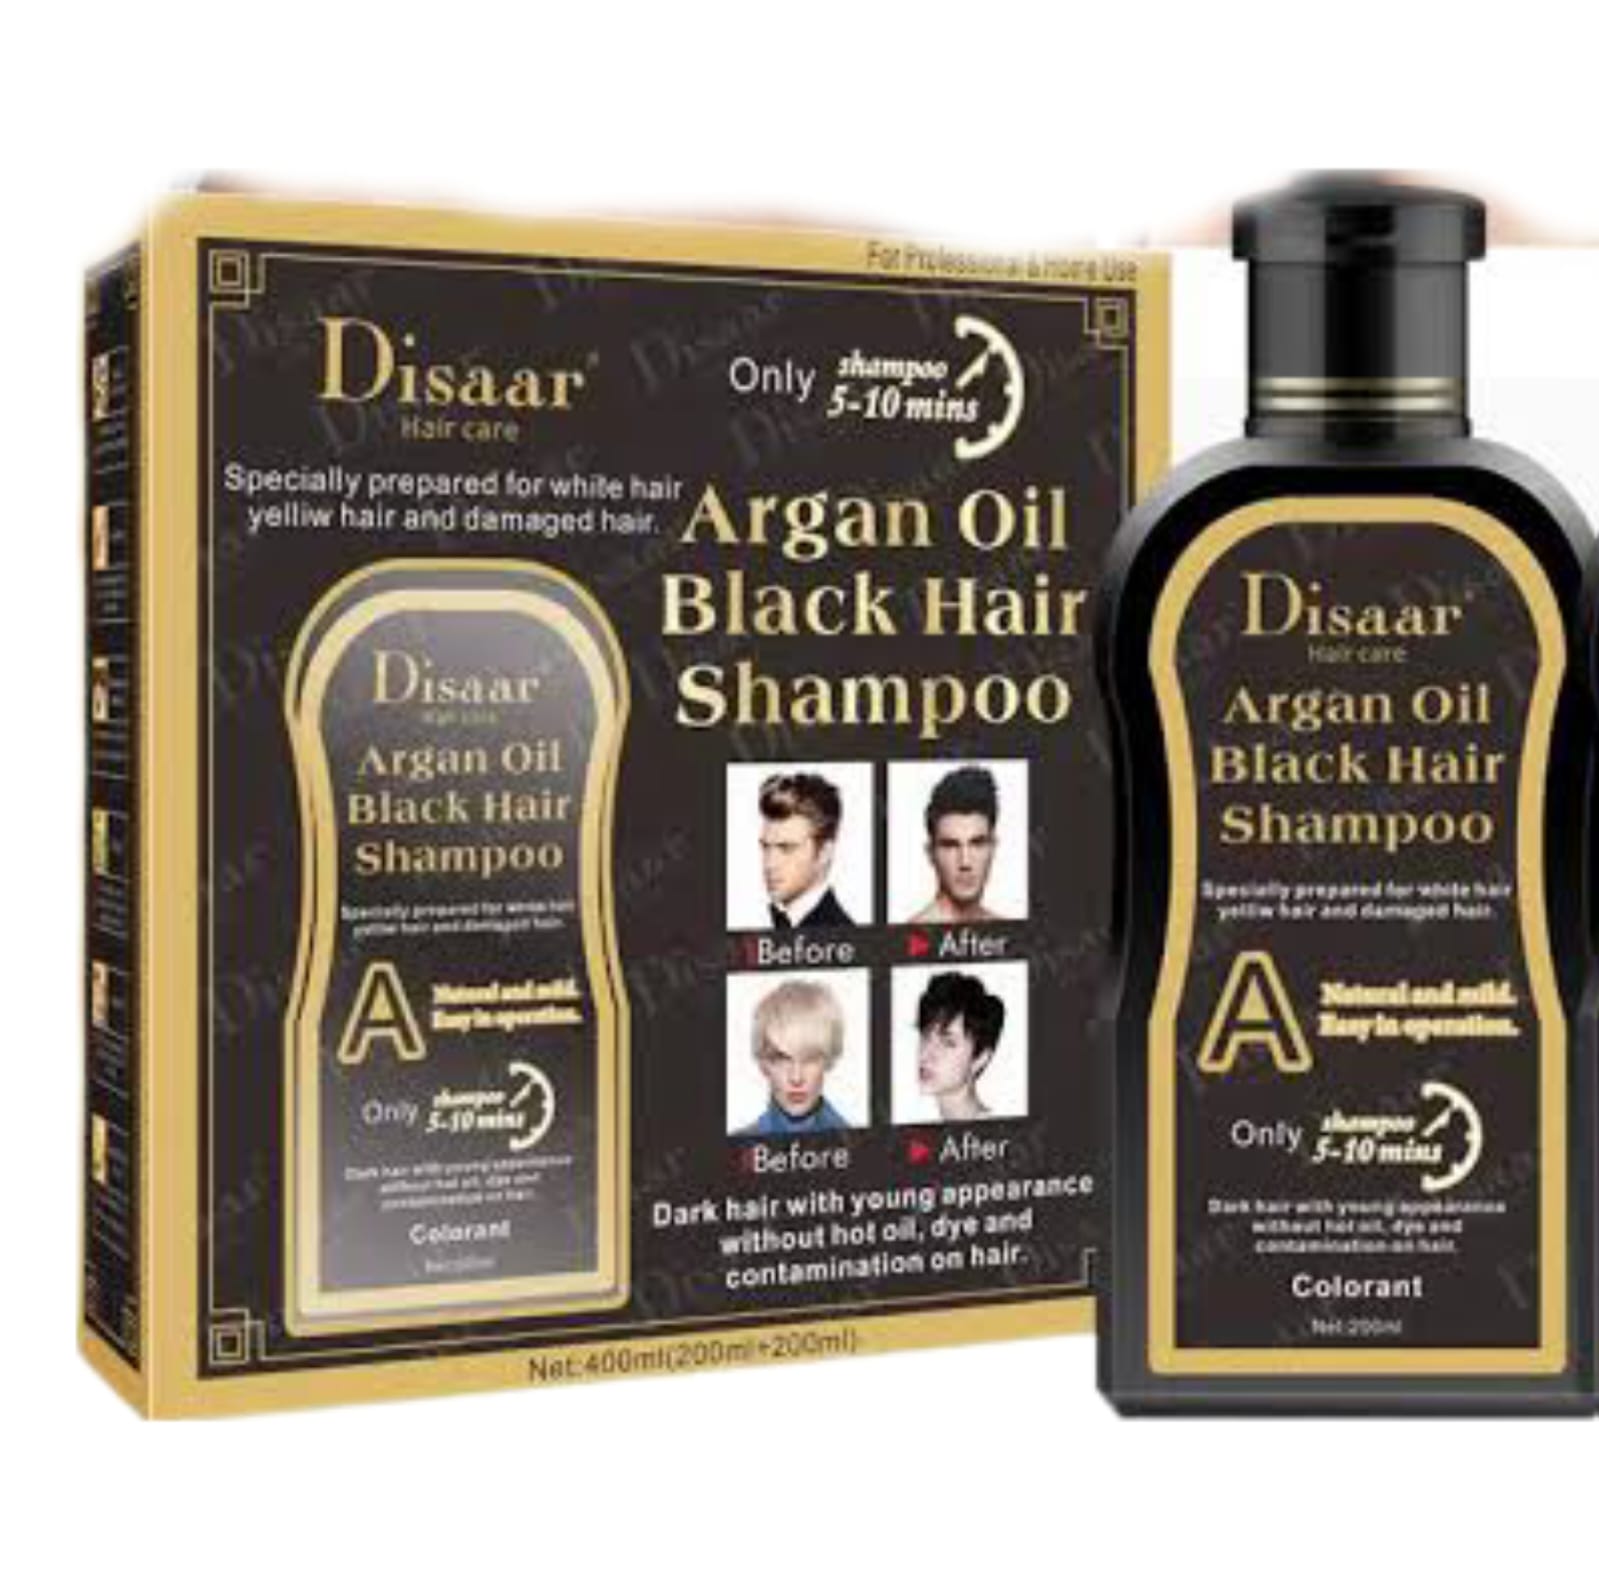 Disaar Hair Care Argan Oil Black Hair Shampoo